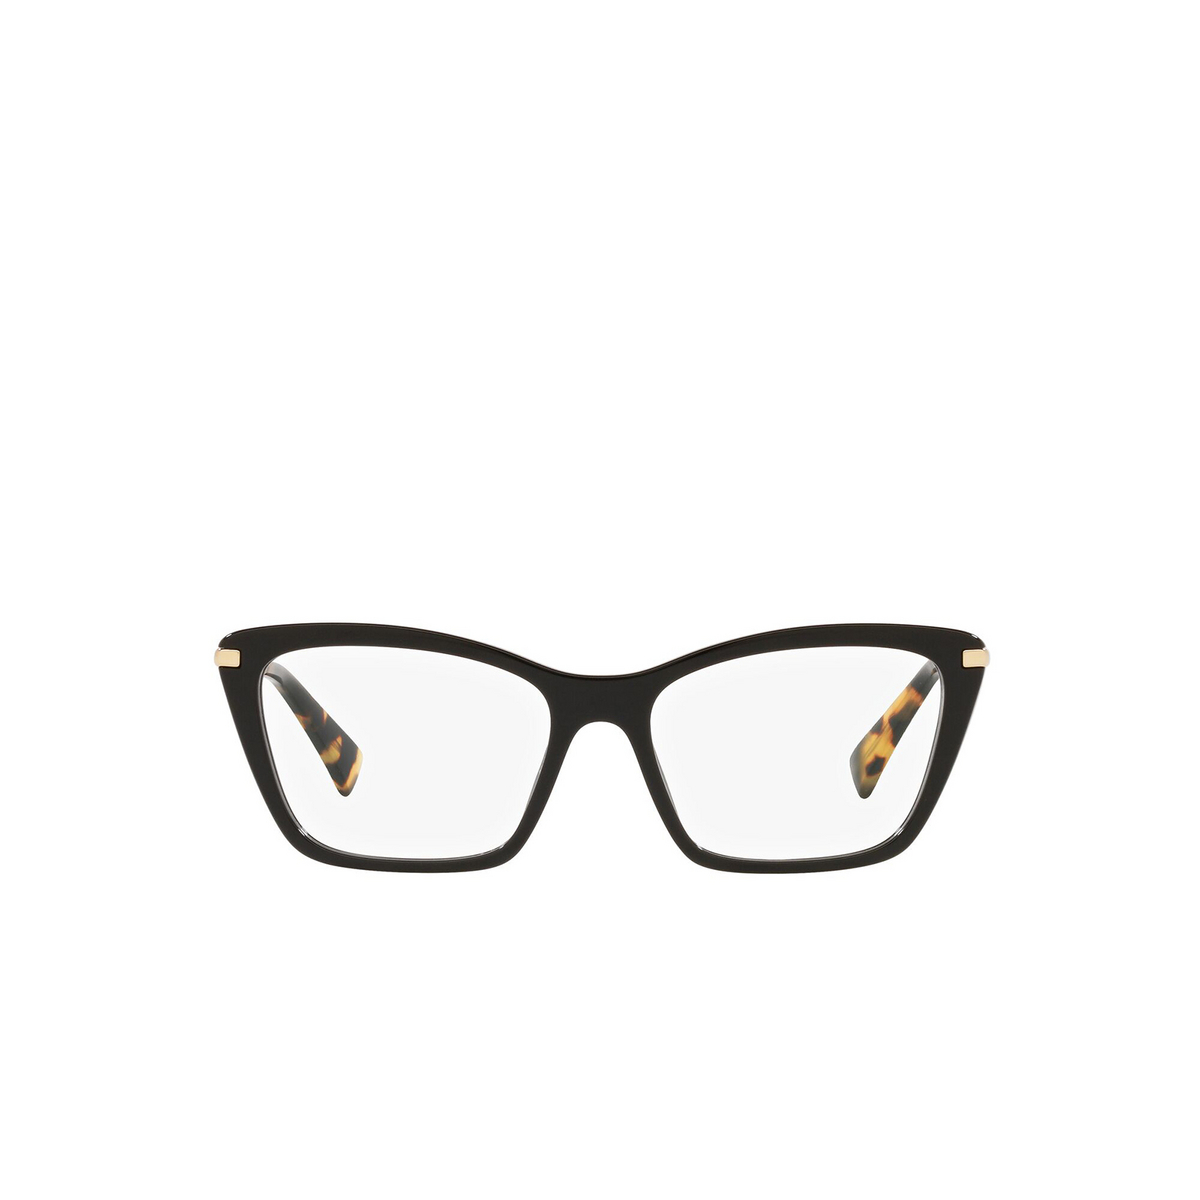 Miu Miu® Cat-eye Eyeglasses: MU 01UV color Black 1AB1O1 - front view.